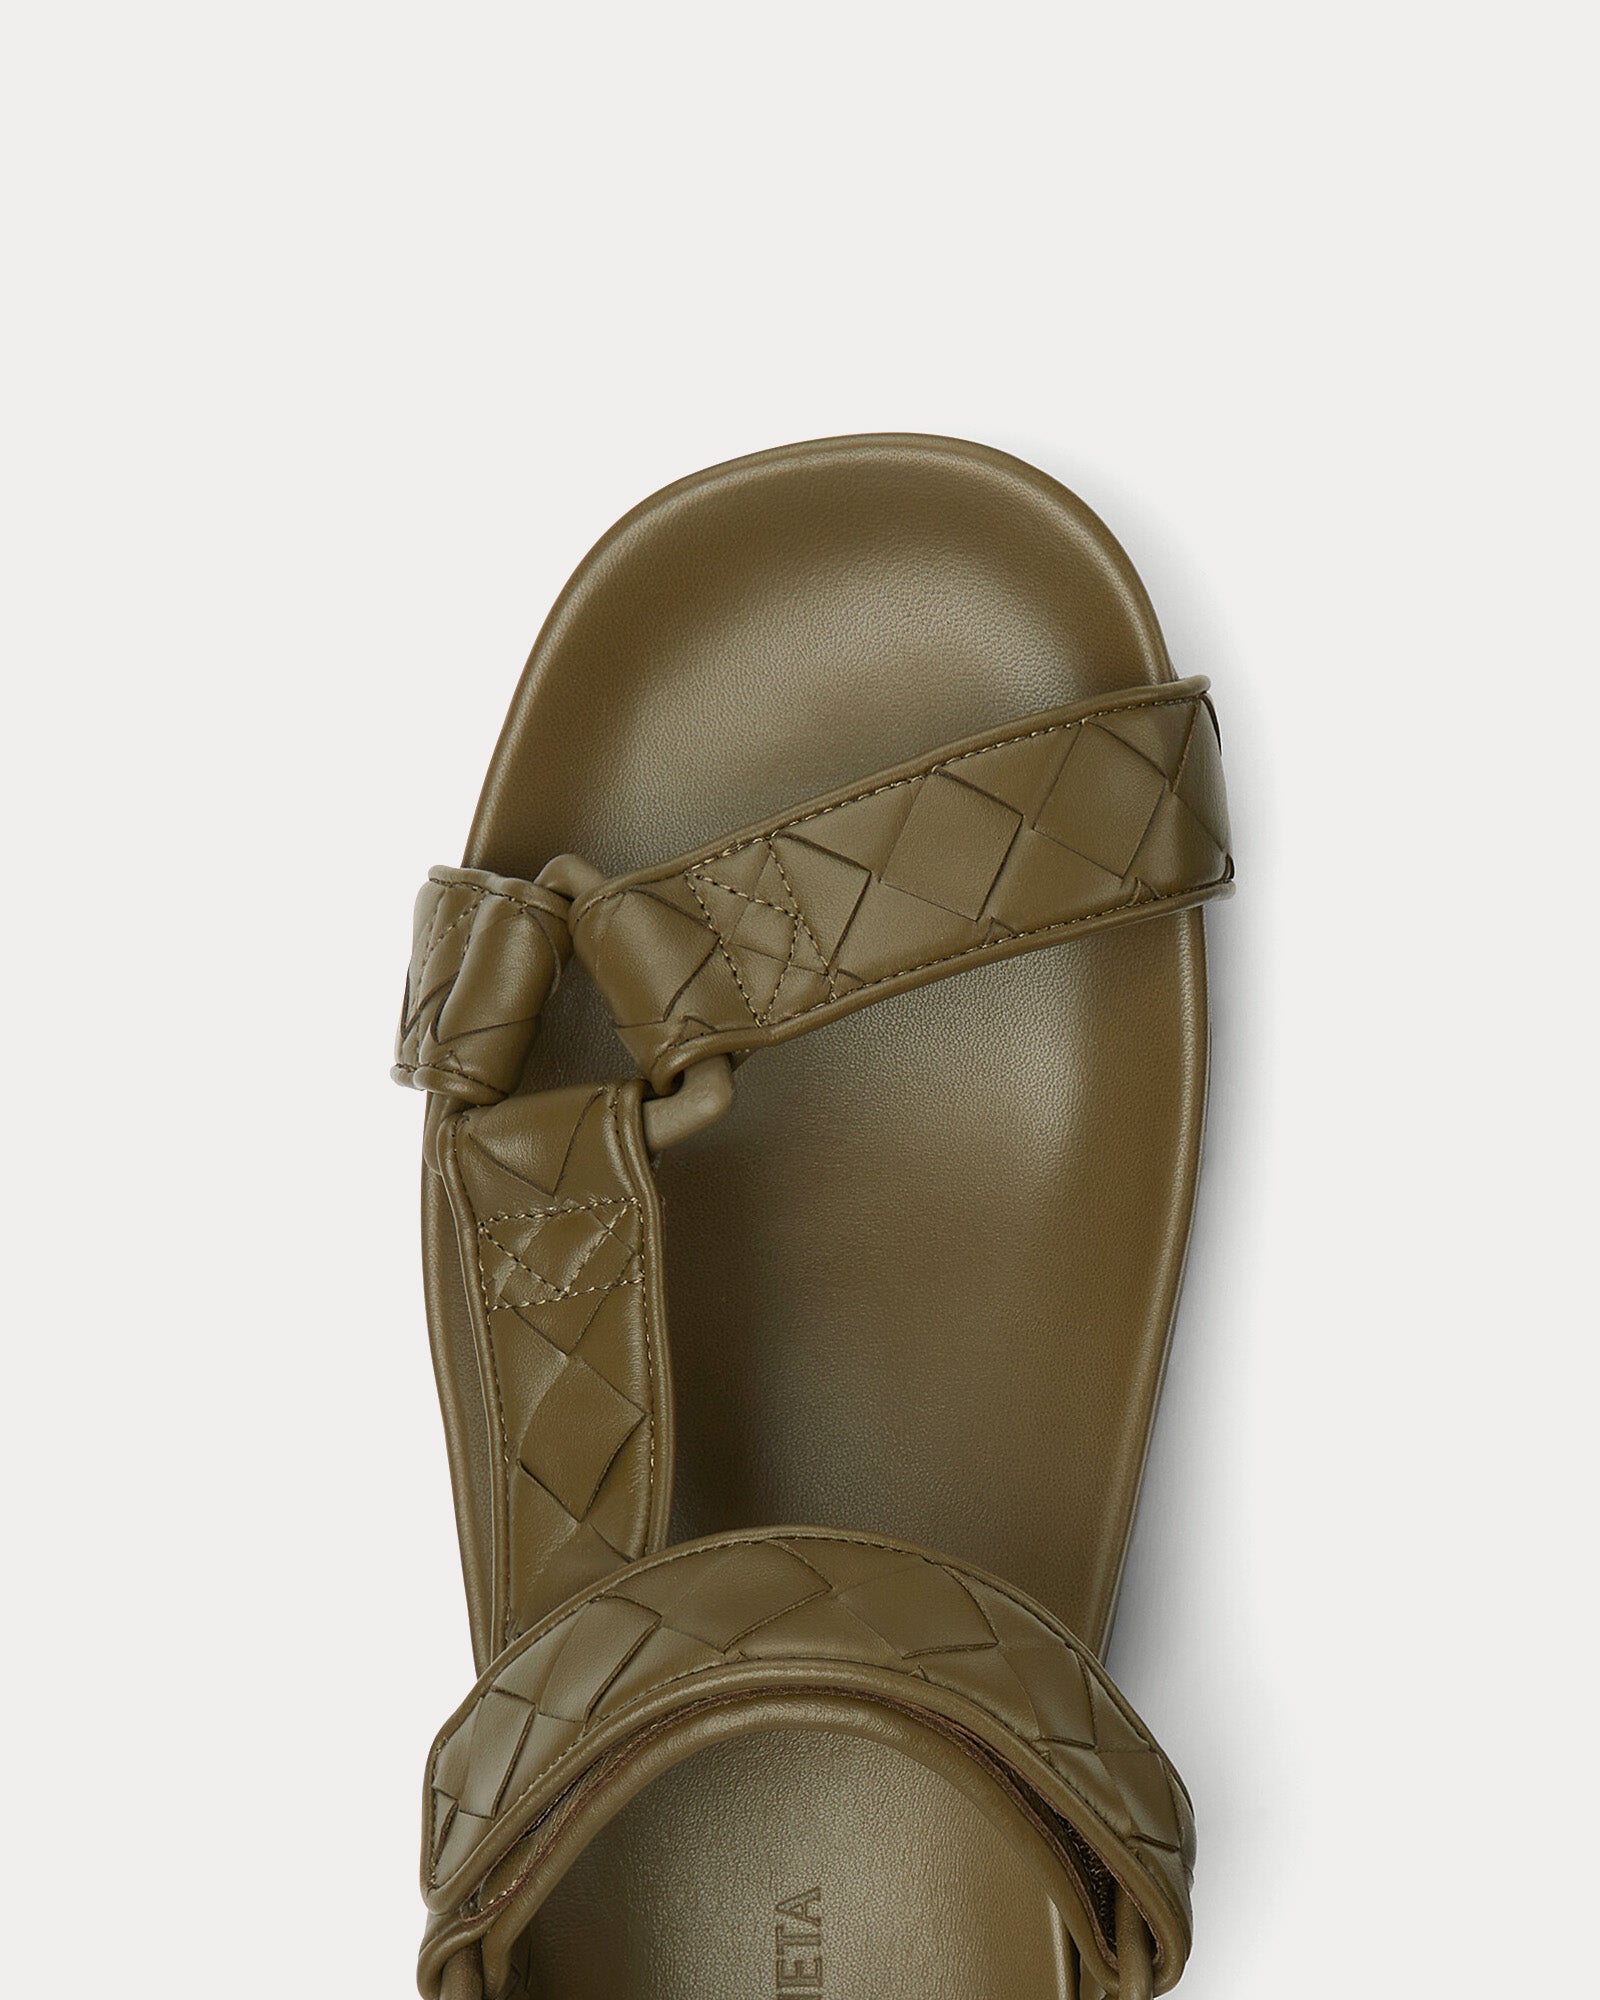 Bottega Veneta - Trip Leather Mud Sandals